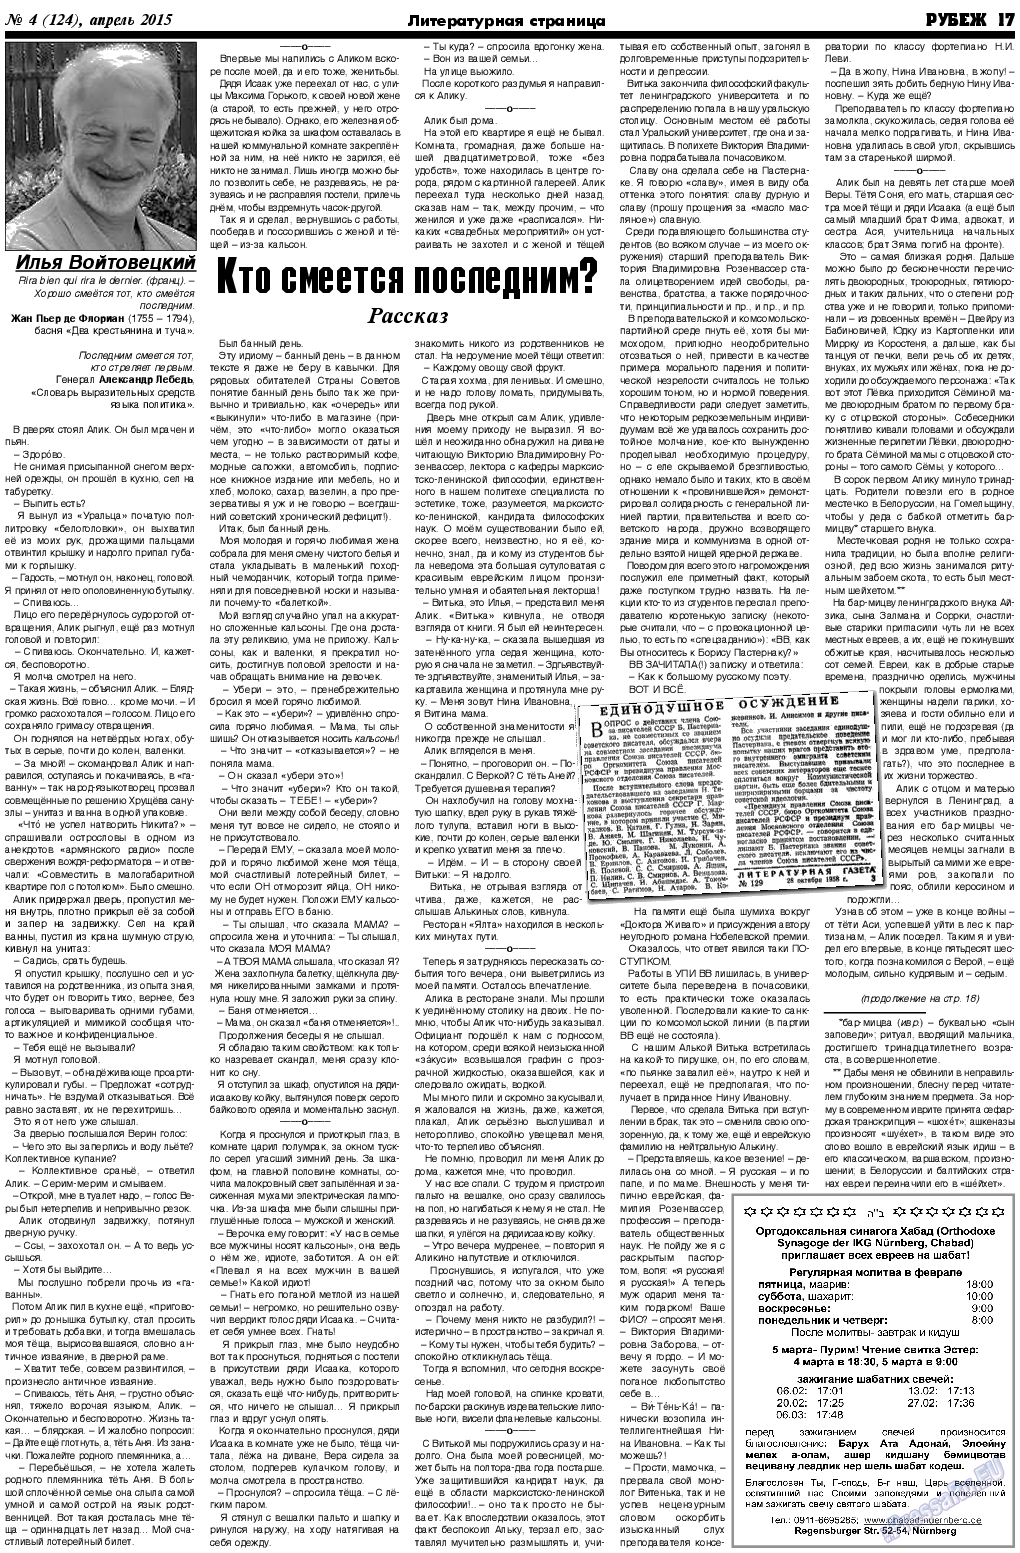 Рубеж, газета. 2015 №4 стр.17